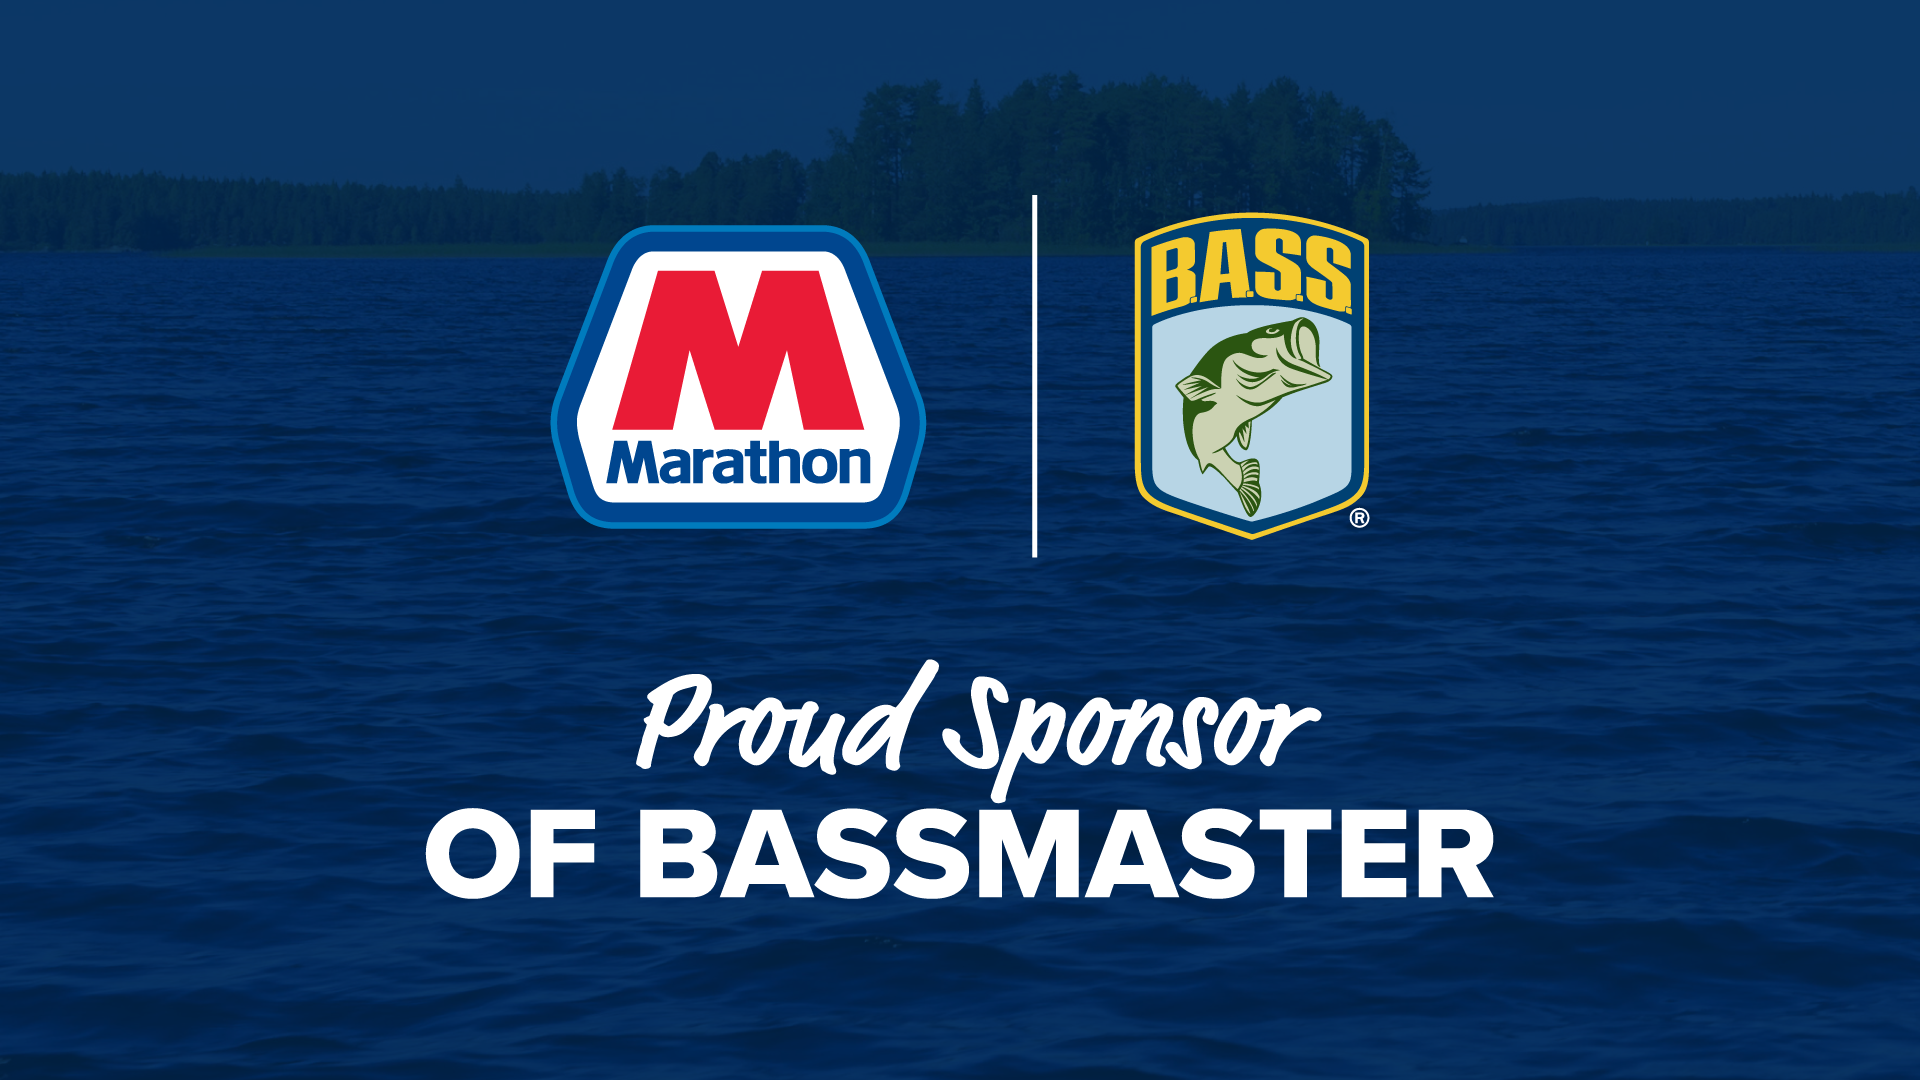 Bassmaster and Marathon extend partnership for 2024 season